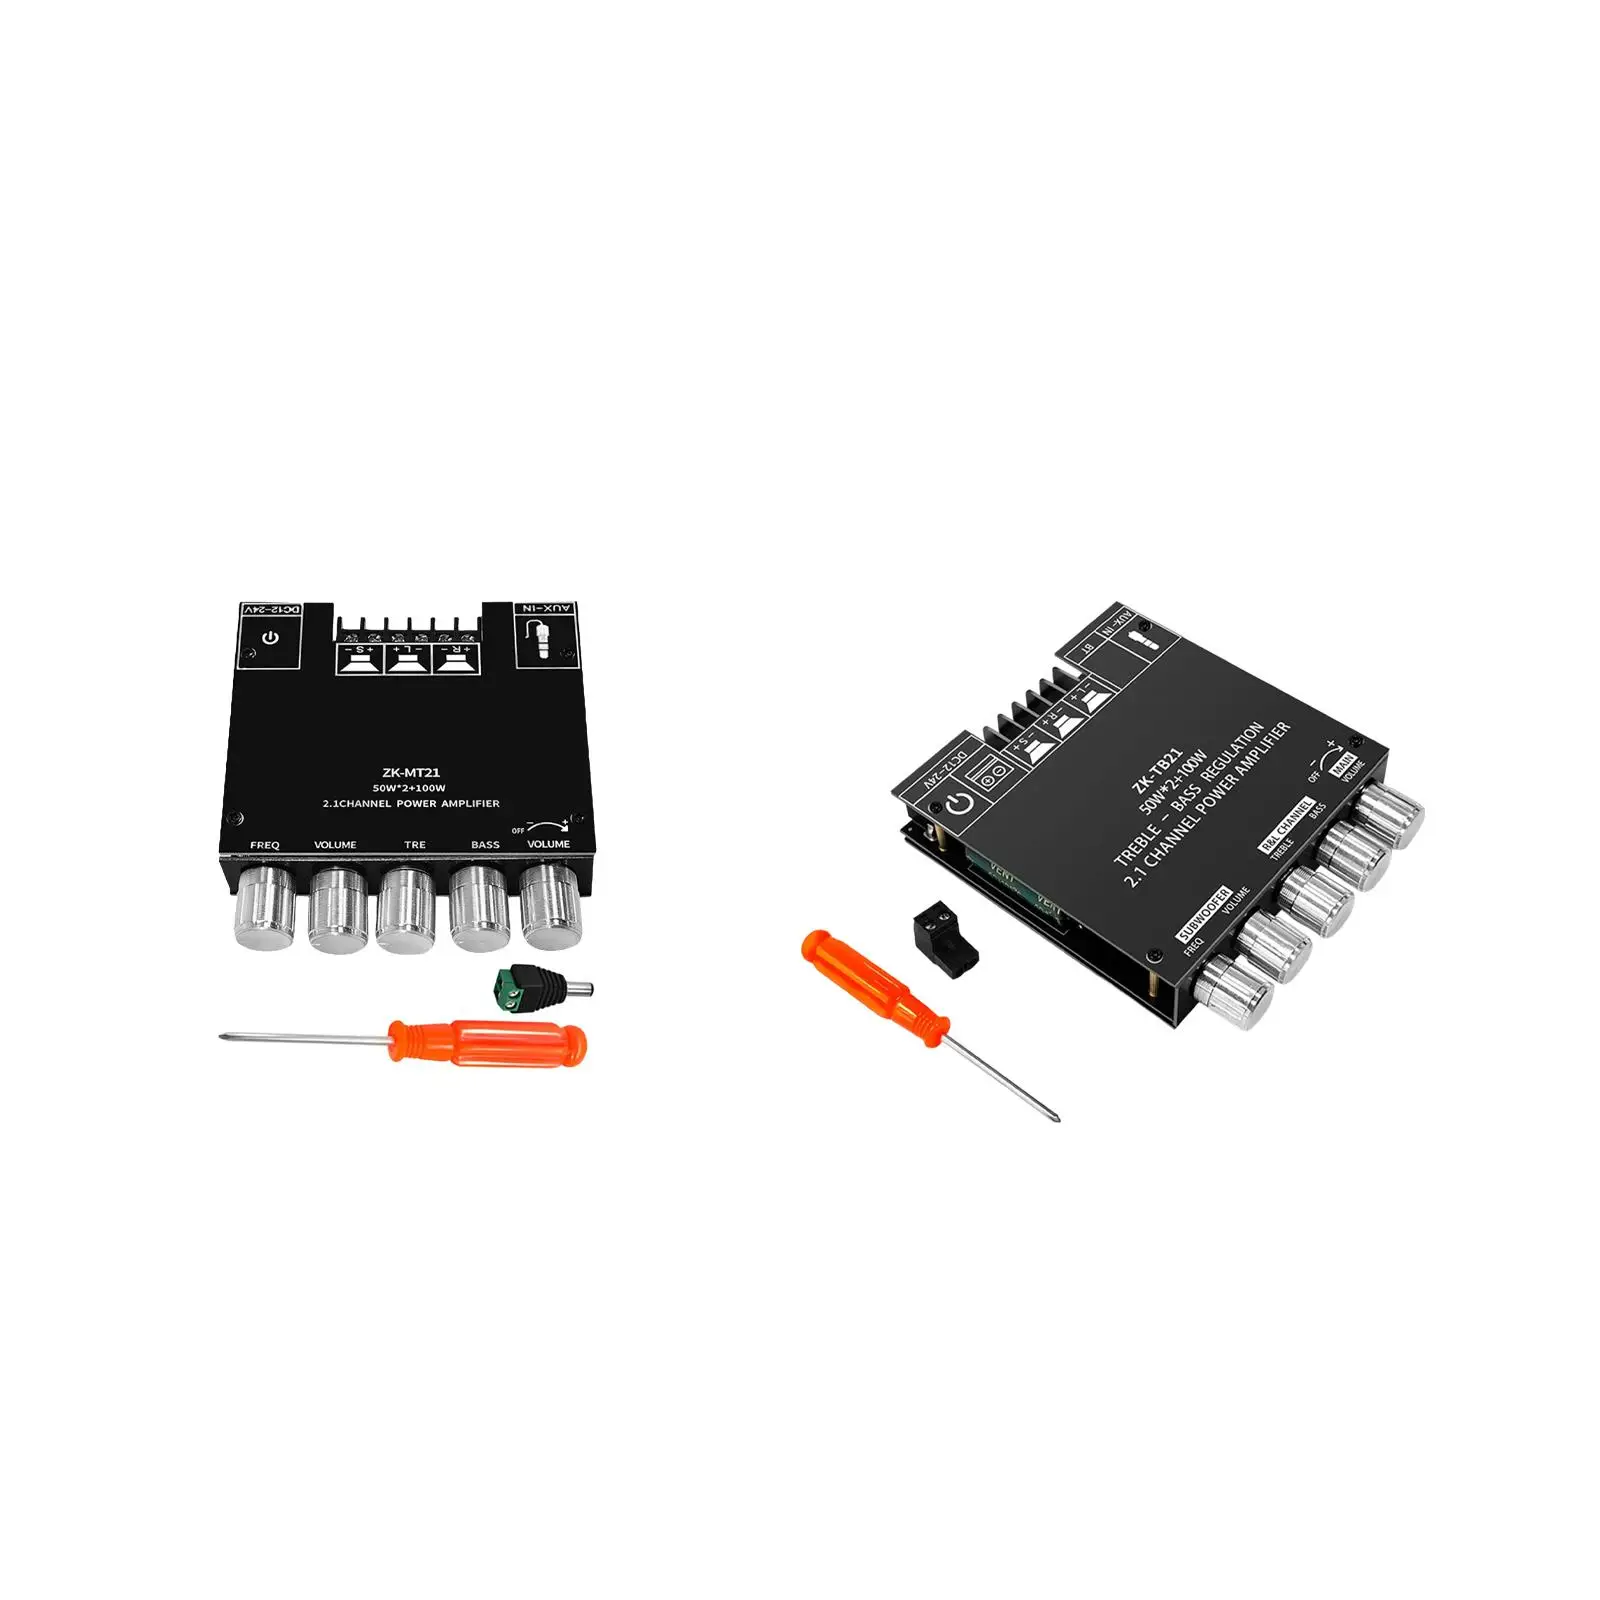 Audio Power Amplifier Module with Subwoofer HiFi Stereo 12V-24V Subwoofer Amplifier Board Digital Amp Board for DIY Audio